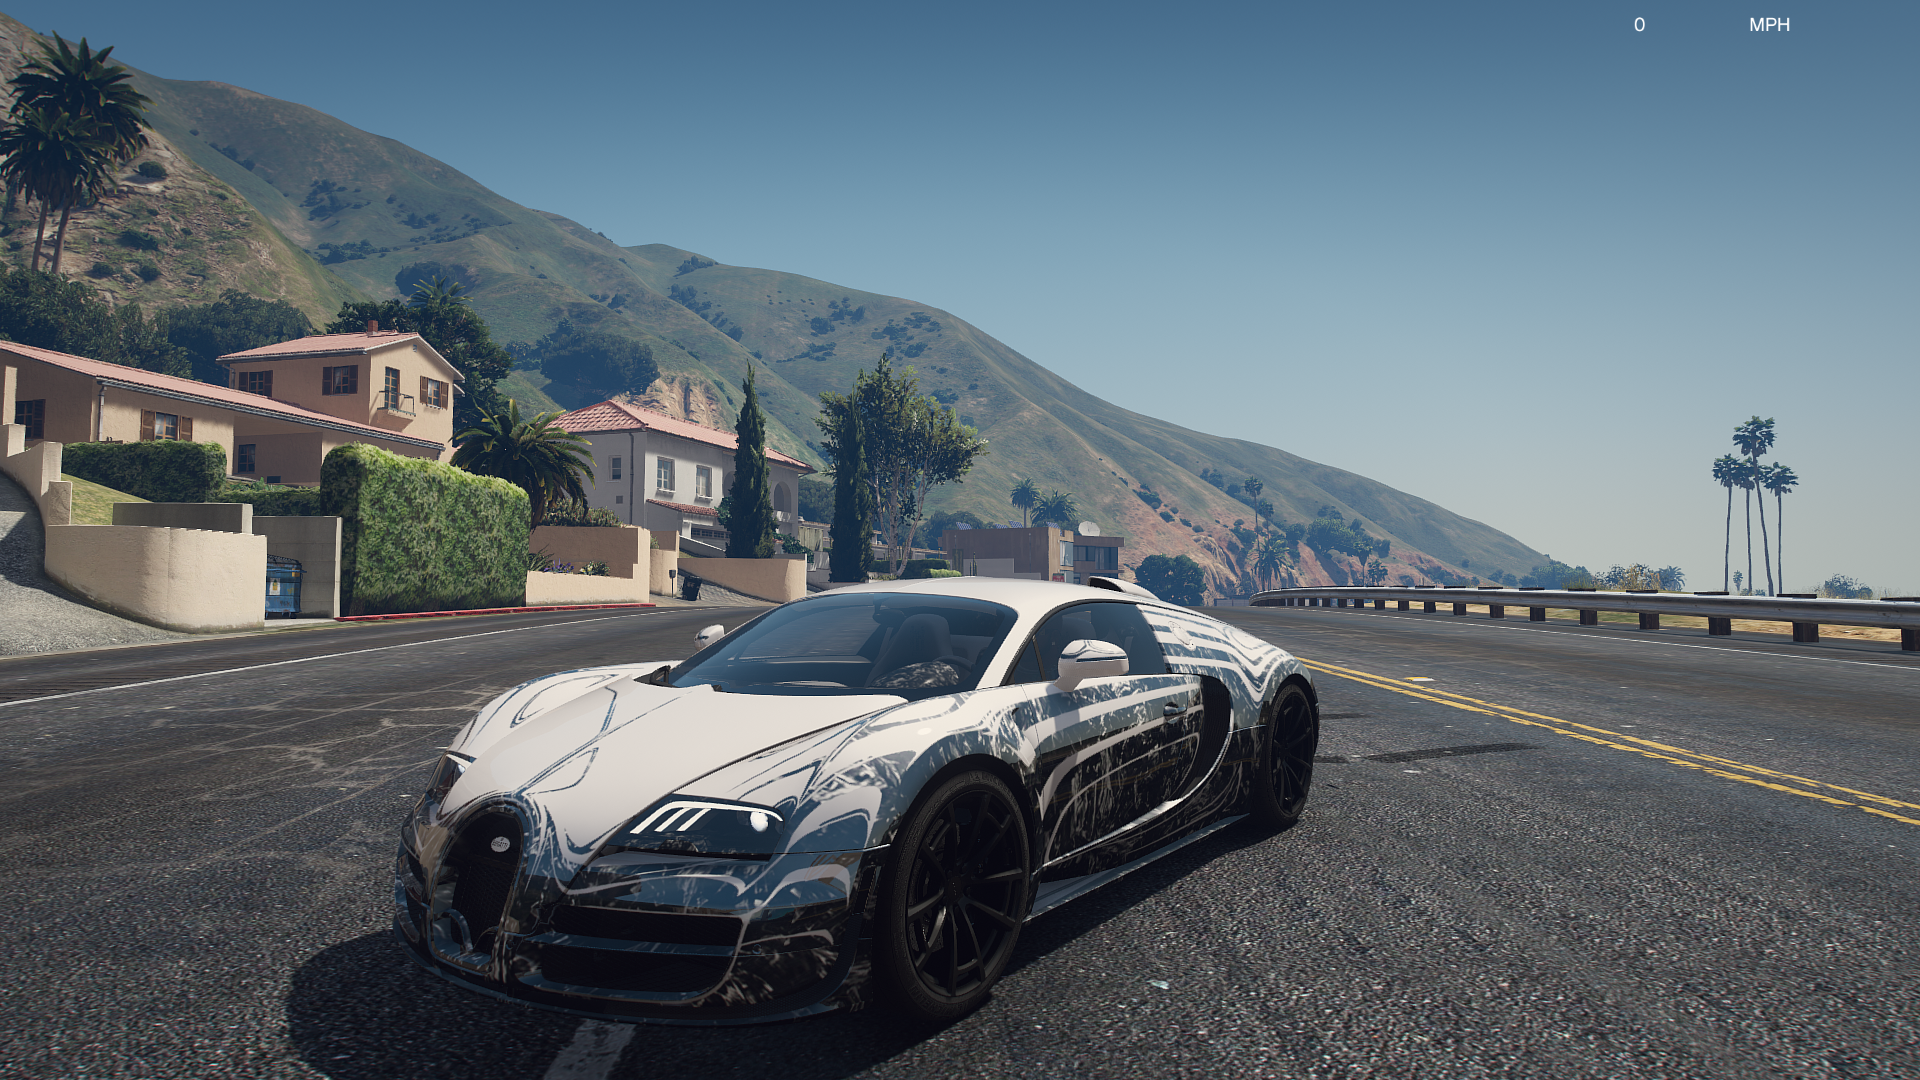 General 1920x1080 NaturalVision Evolved Grand Theft Auto V Grand Theft Auto PC gaming Bugatti car Los Santos Los Angeles vehicle CGI road asphalt